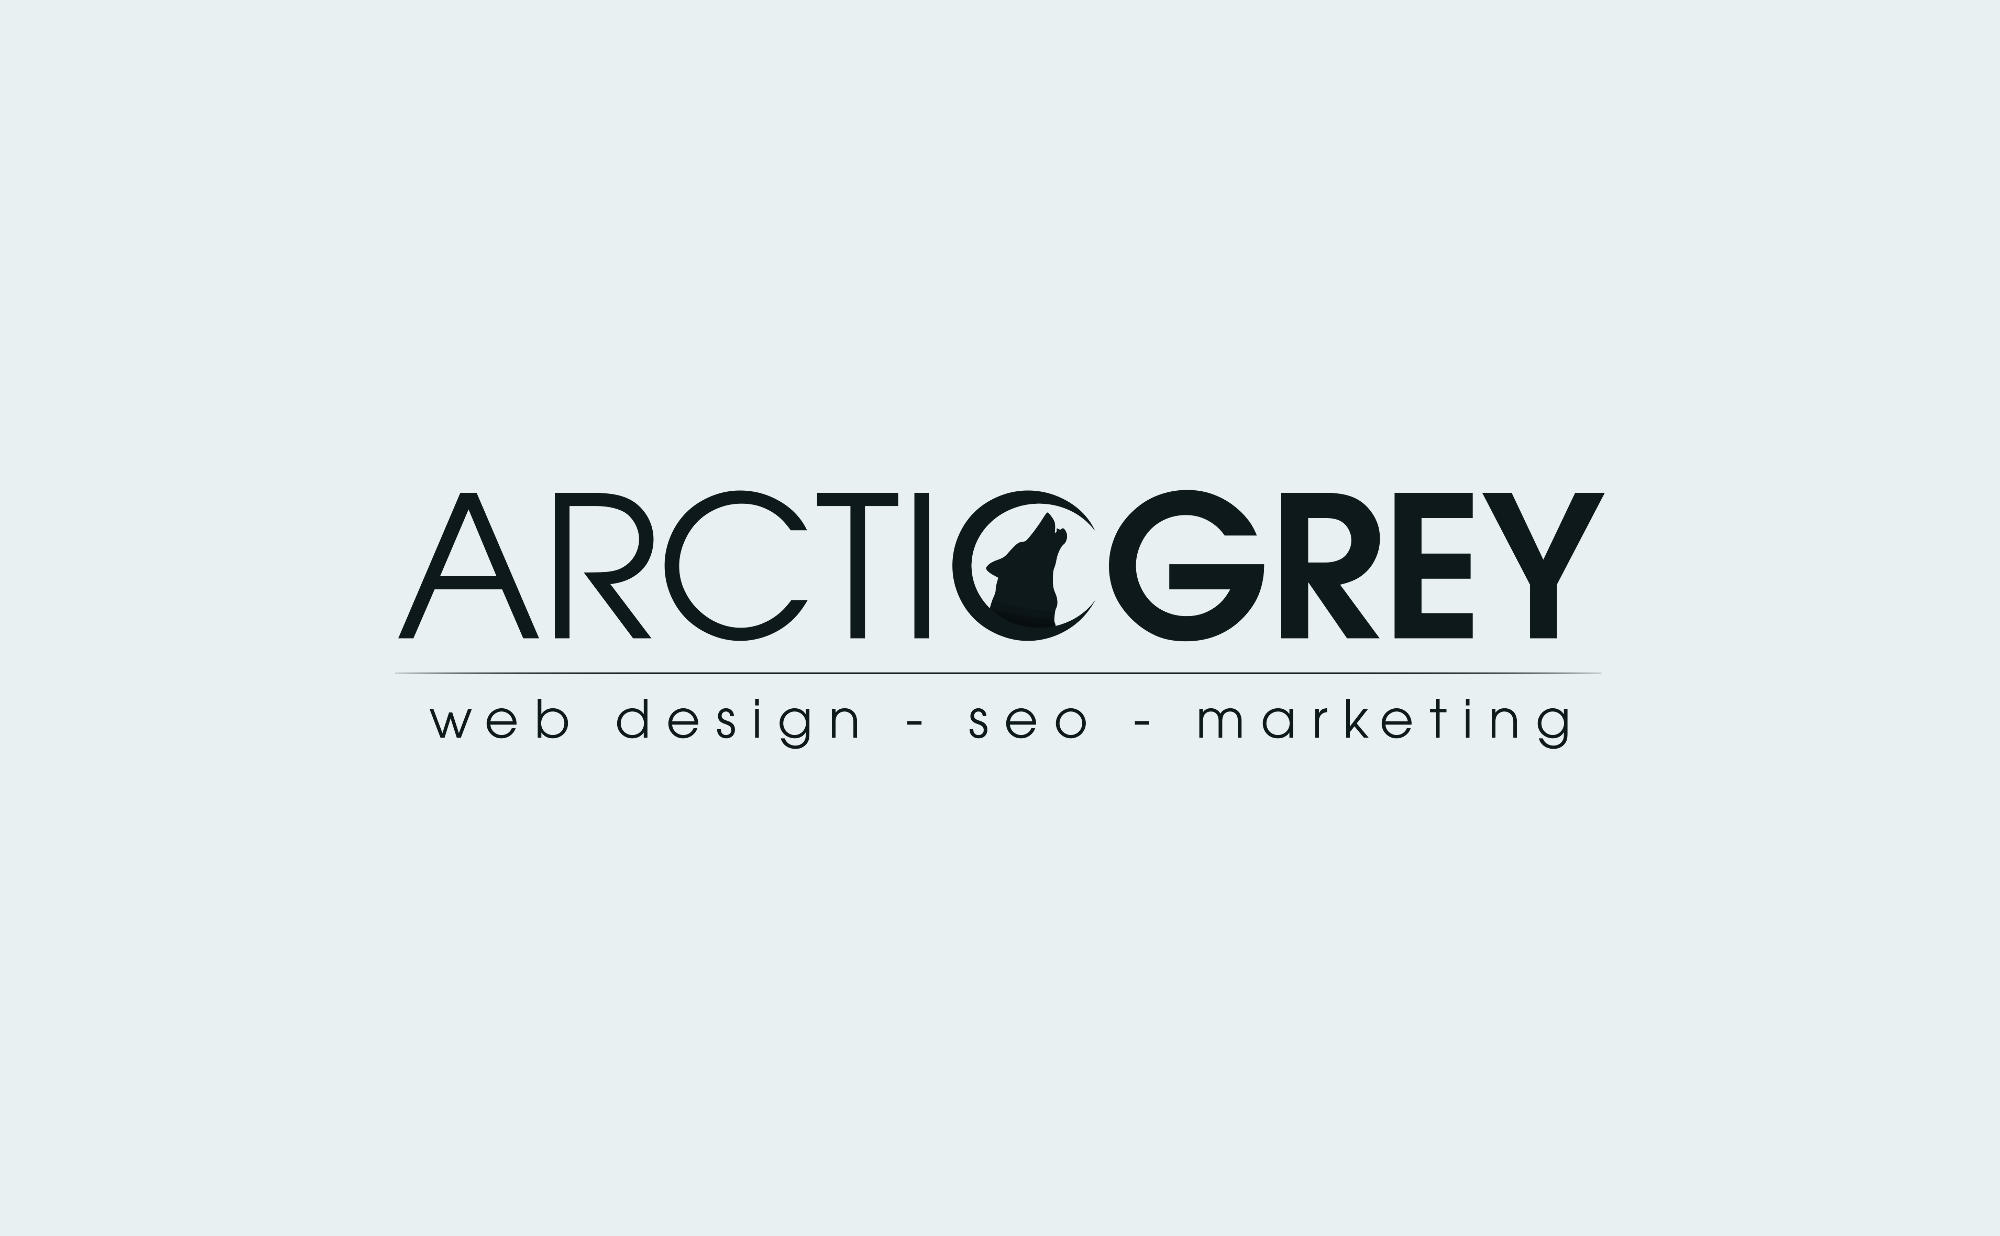 Best SEO Web Development Firm Logo: Arctic Grey Inc